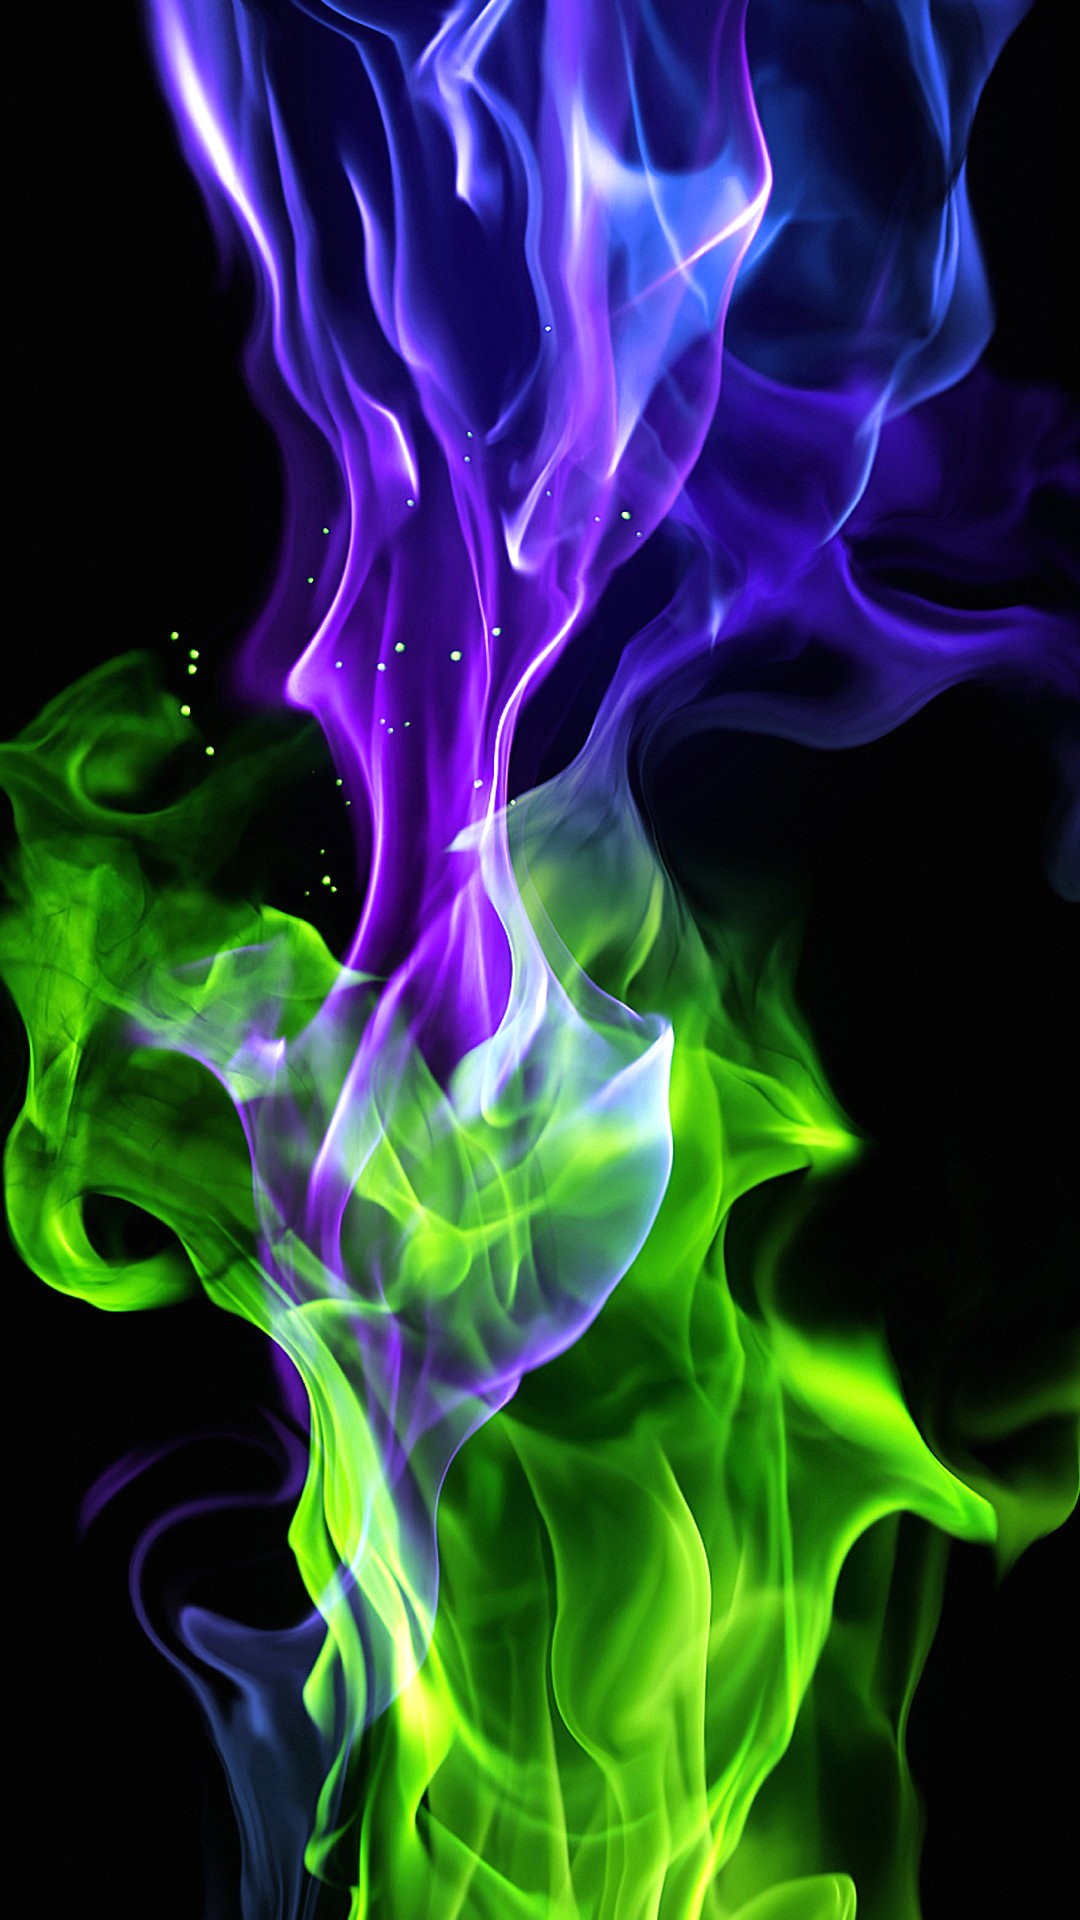 galaxy grand prime wallpaper,green,purple,water,fractal art,smoke